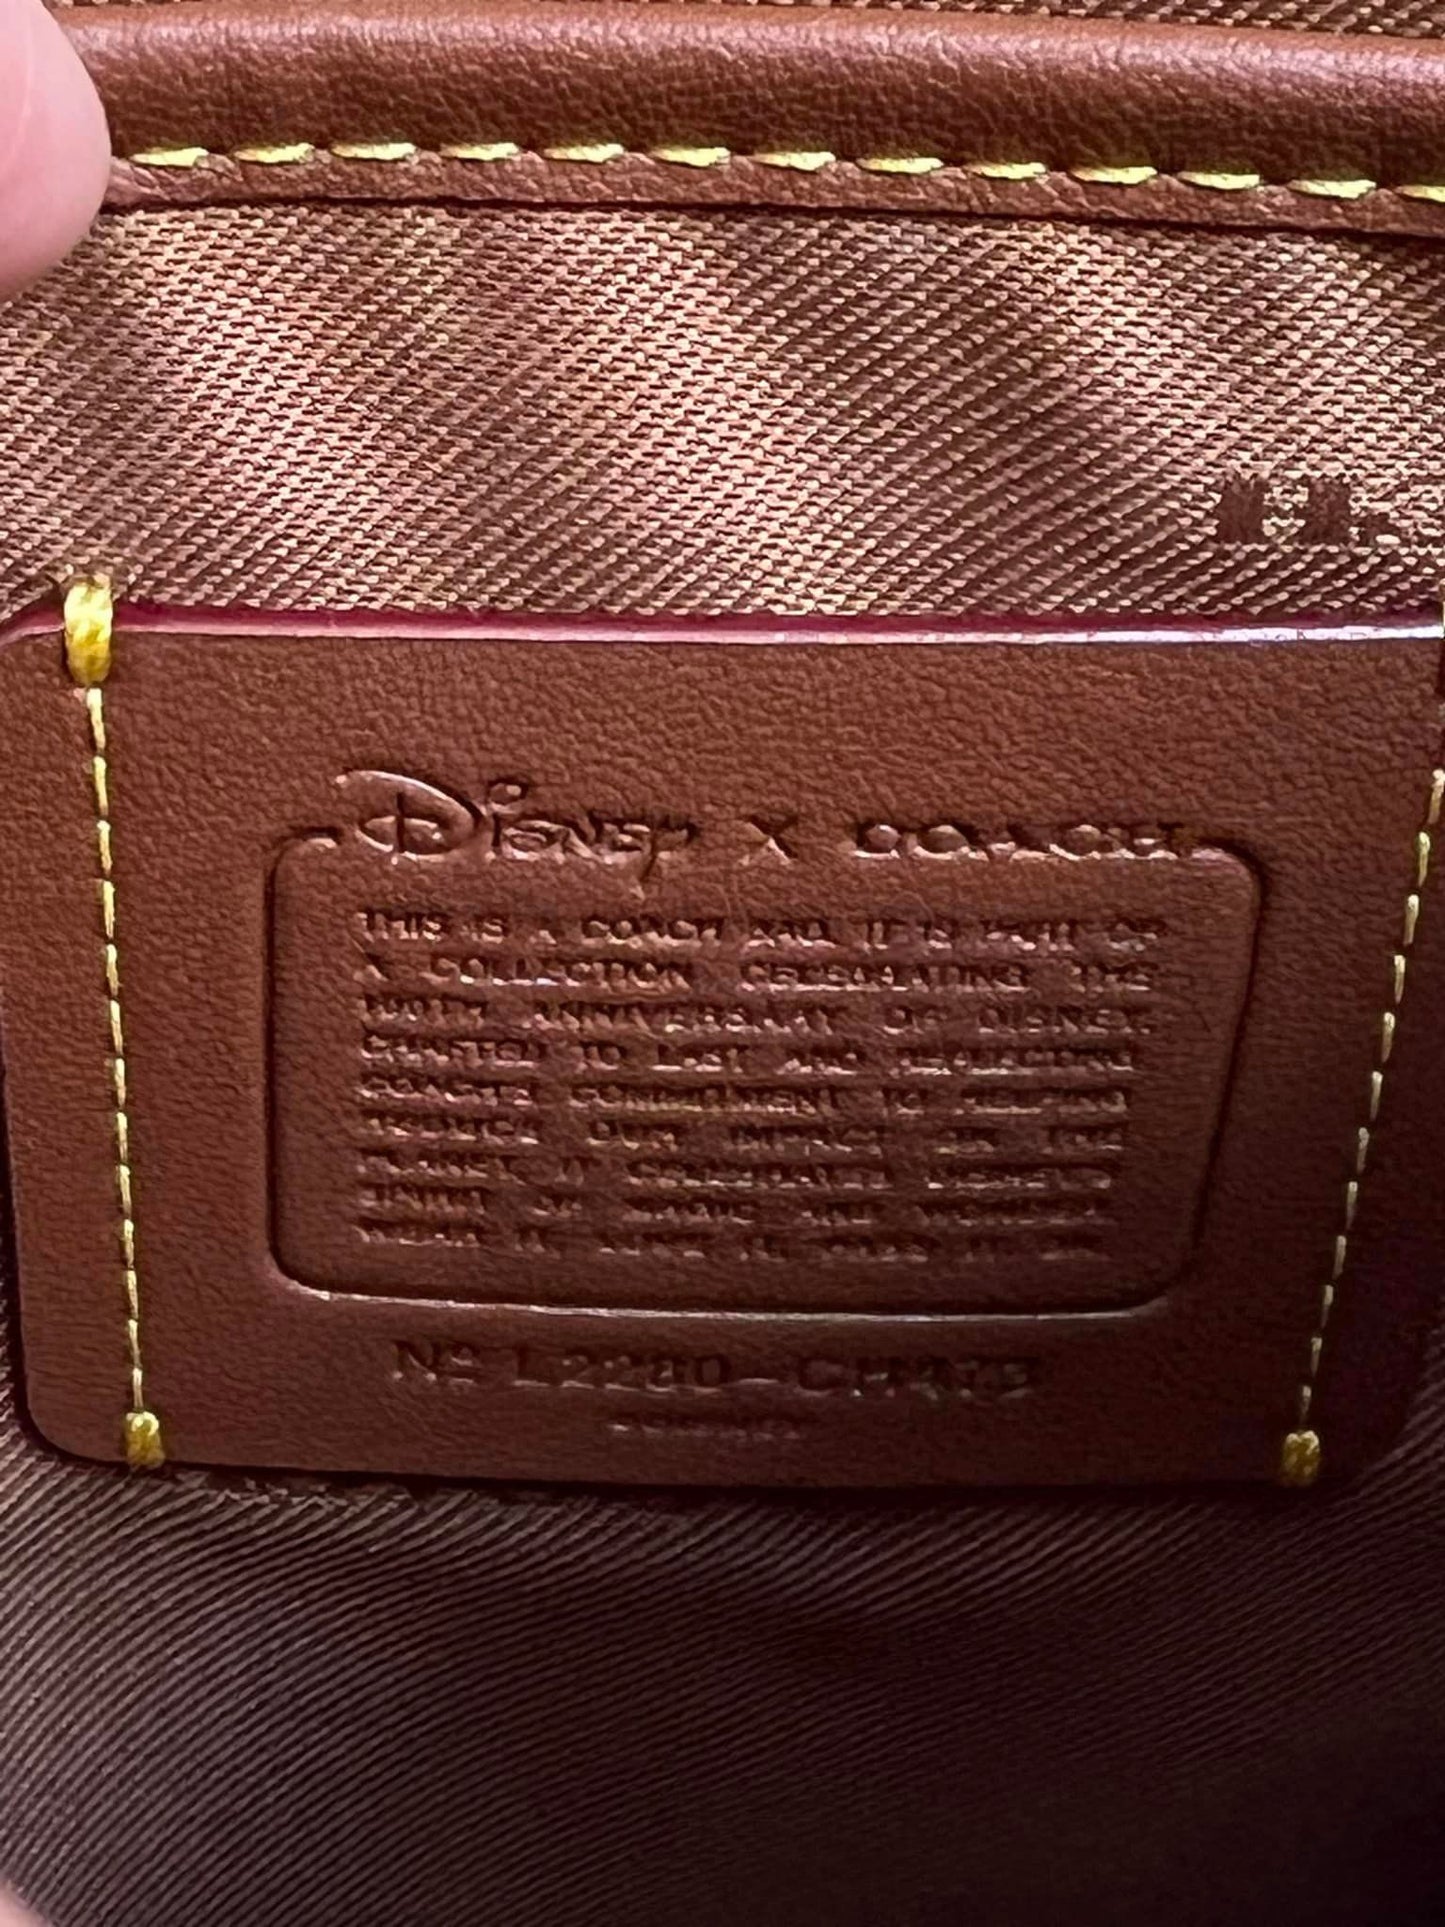 Disney X Coach Kitt Messenger Crossbody in Regenerative Leather with Minnie Mouse